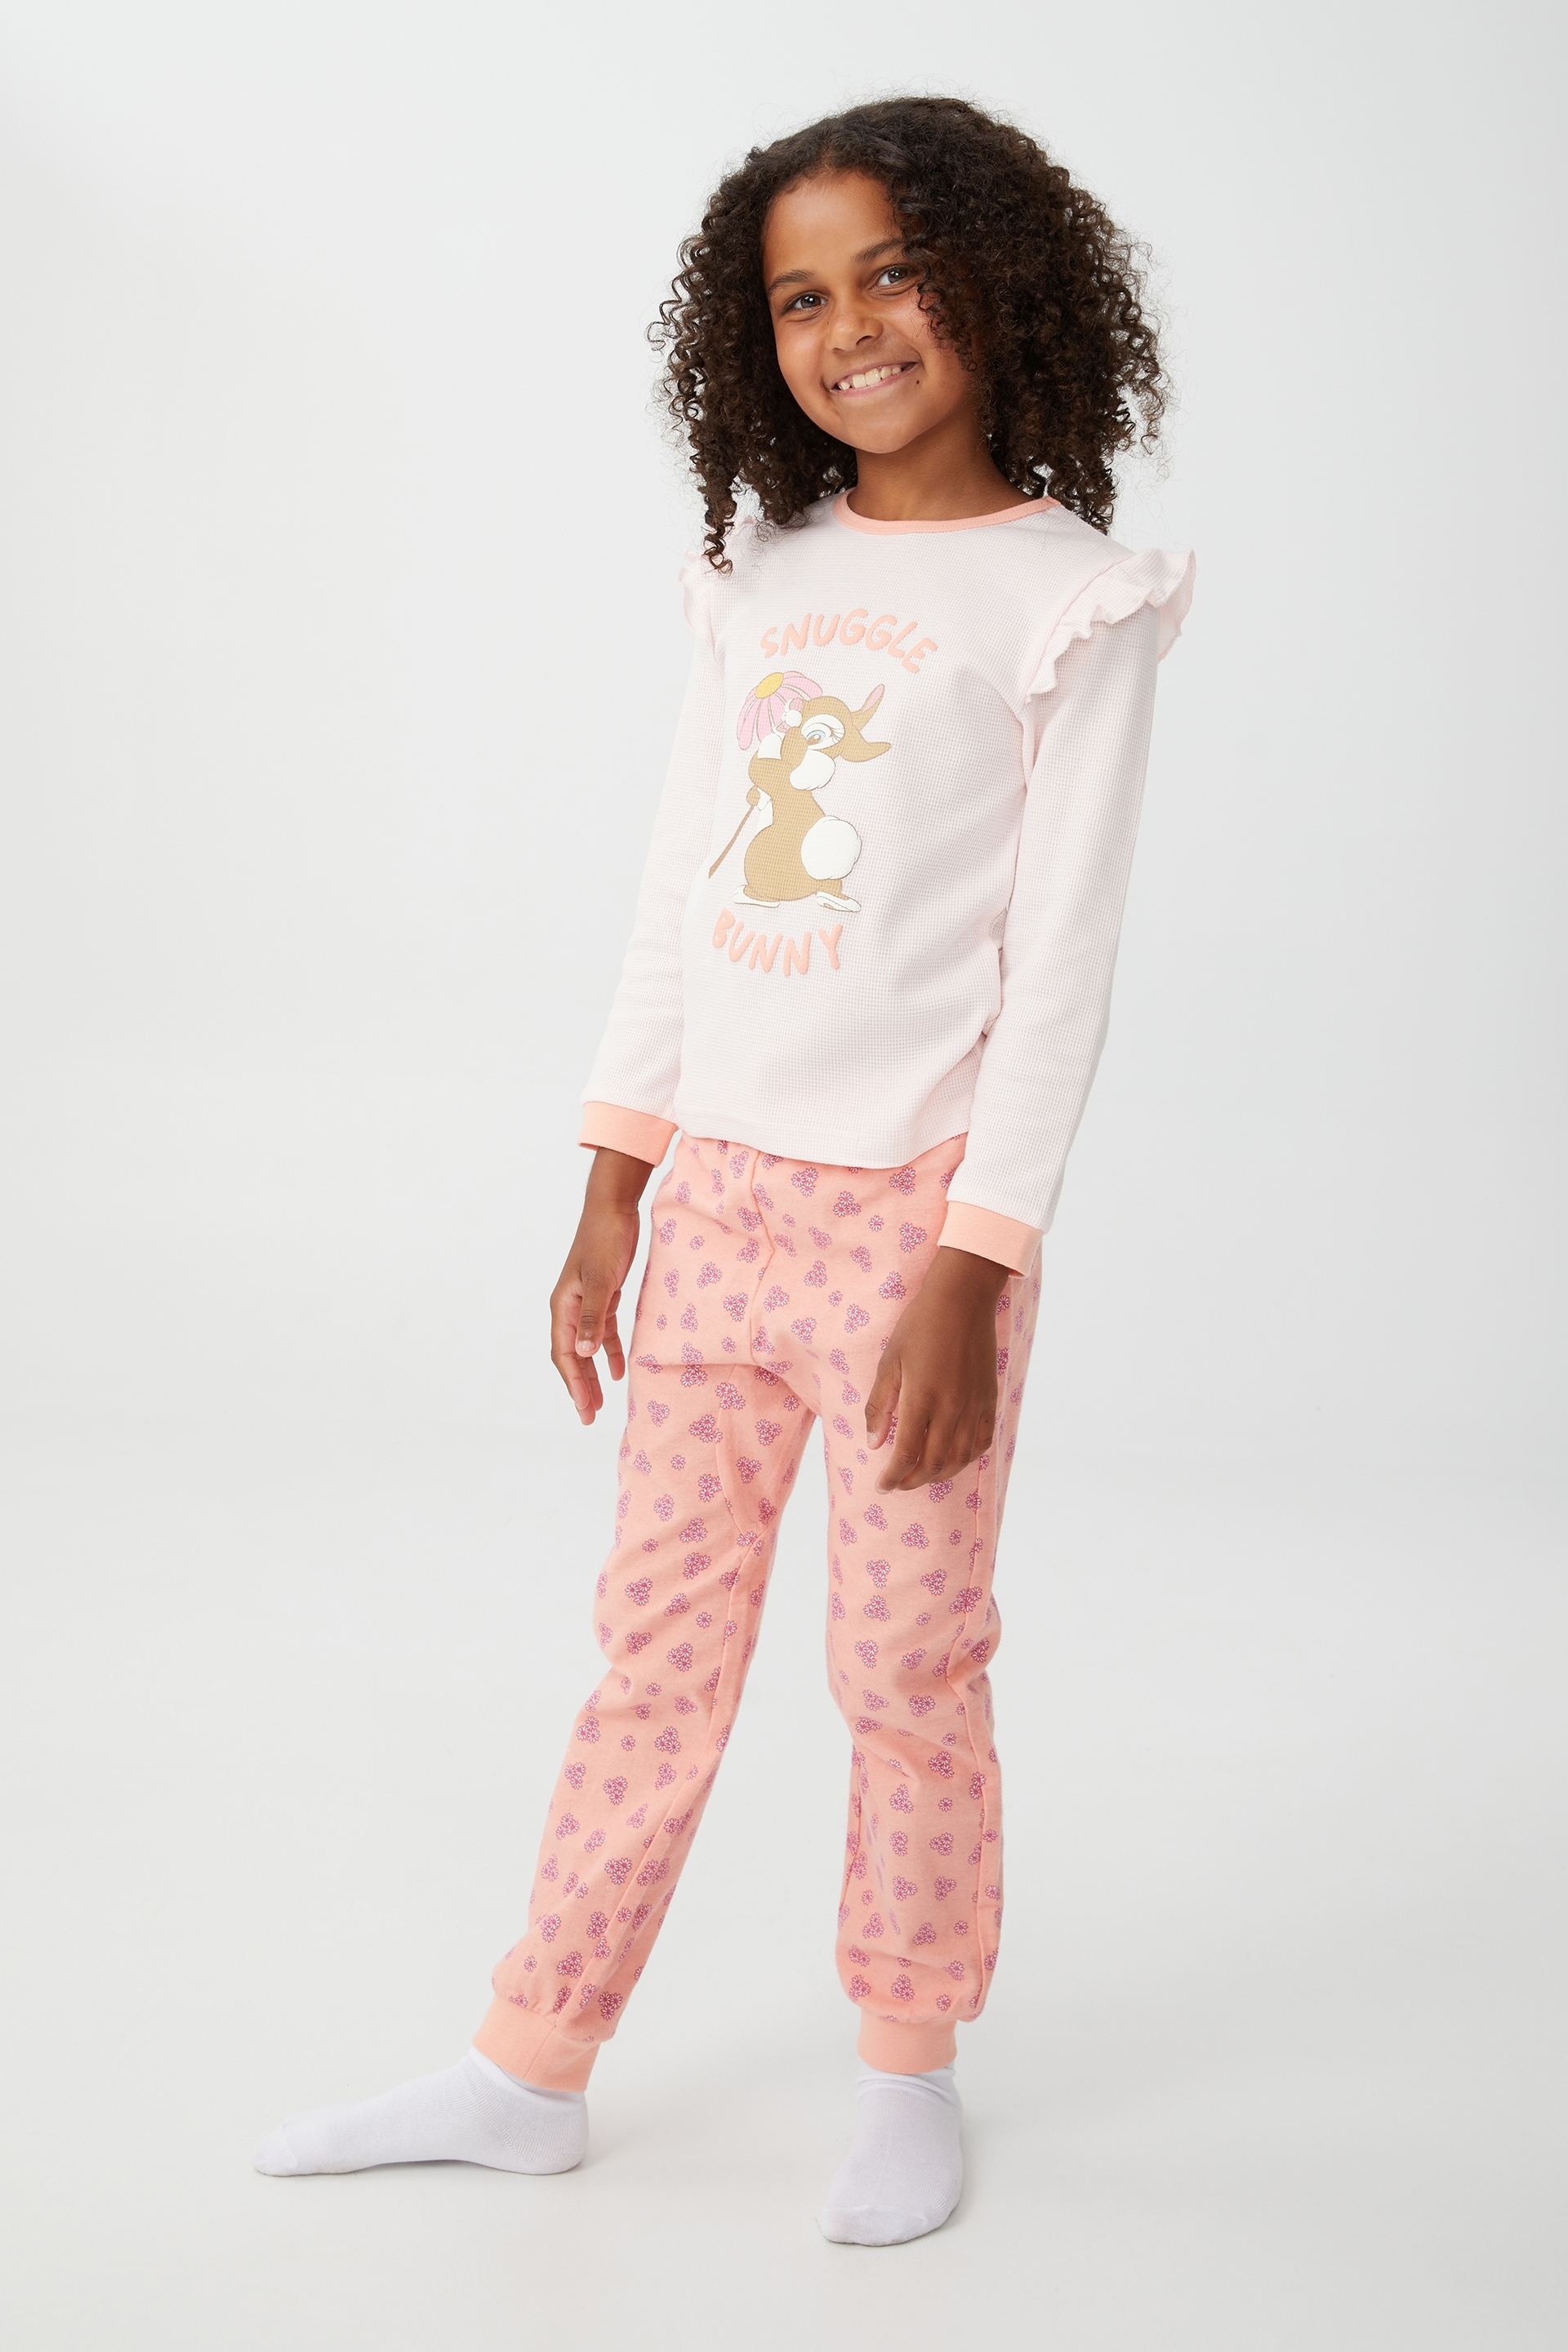 Cotton On Kids - Edith Long Sleeve Flutter Pyjama Set Licensed - Lcn dis crystal pink miss bunny daisy